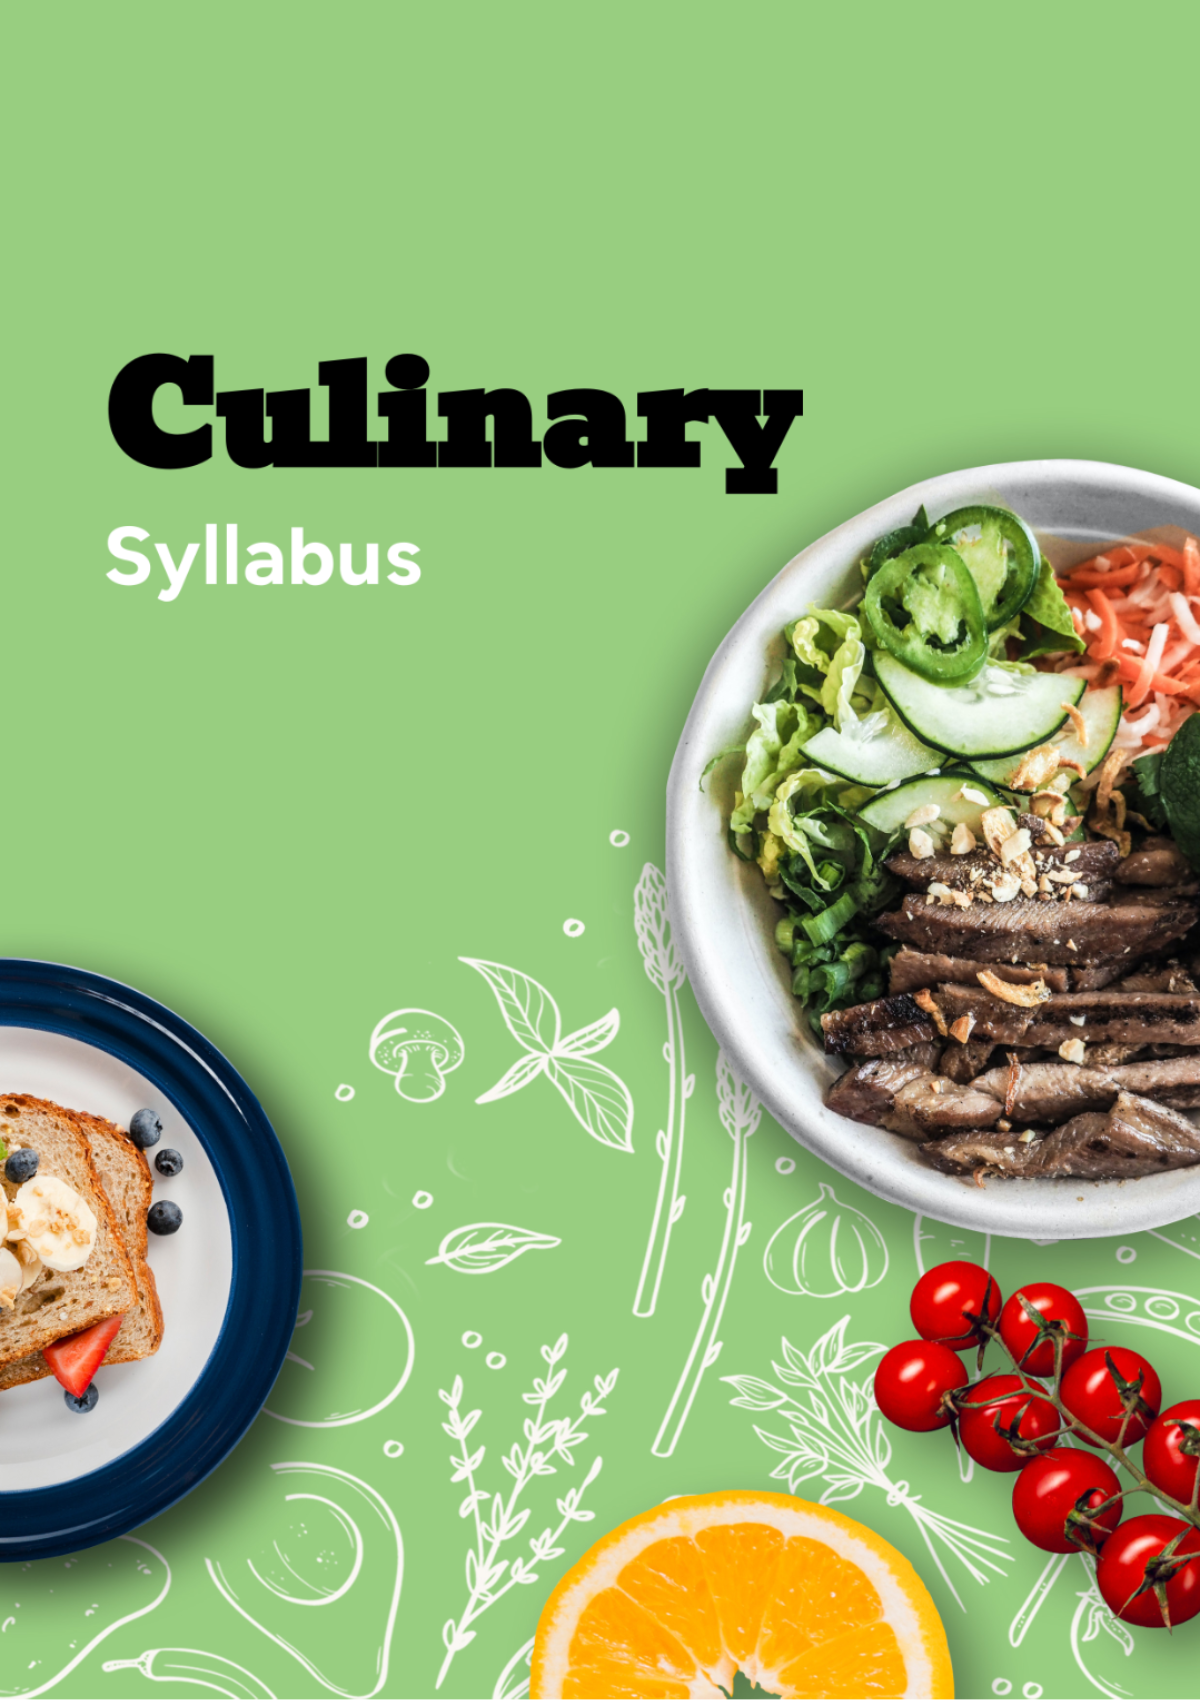 Culinary Syllabus Template